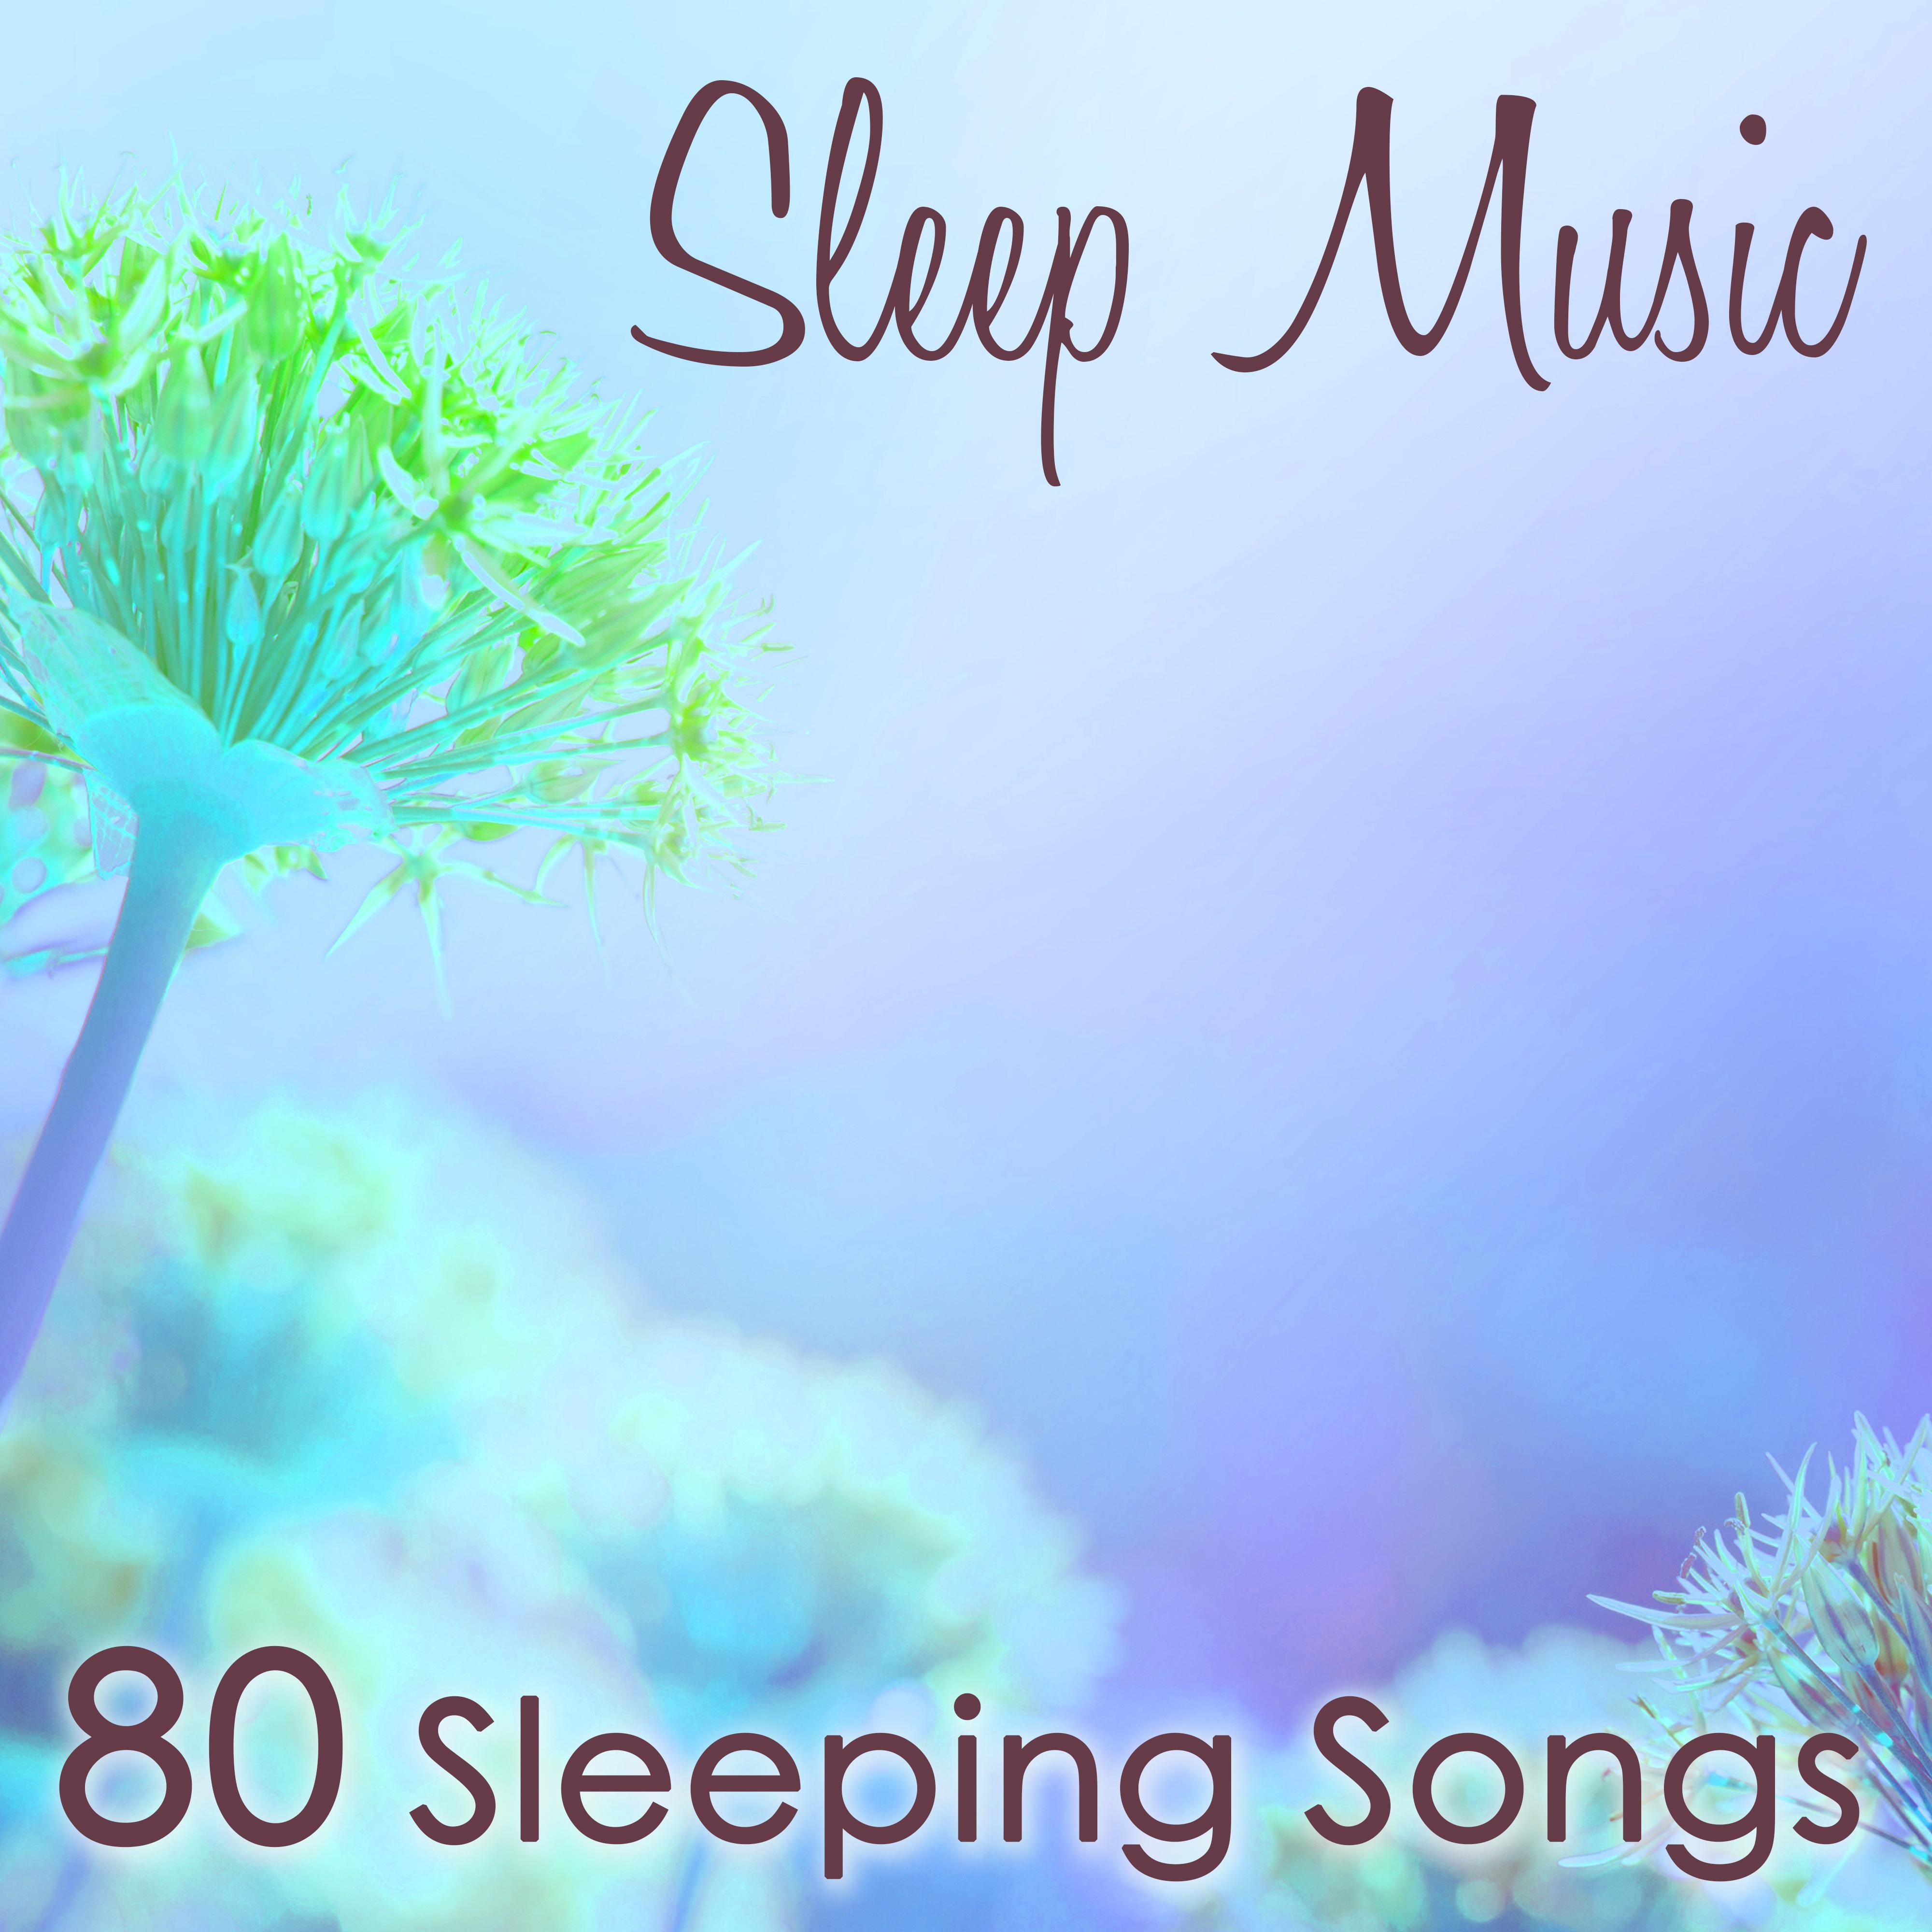 soft sleeping music youtube